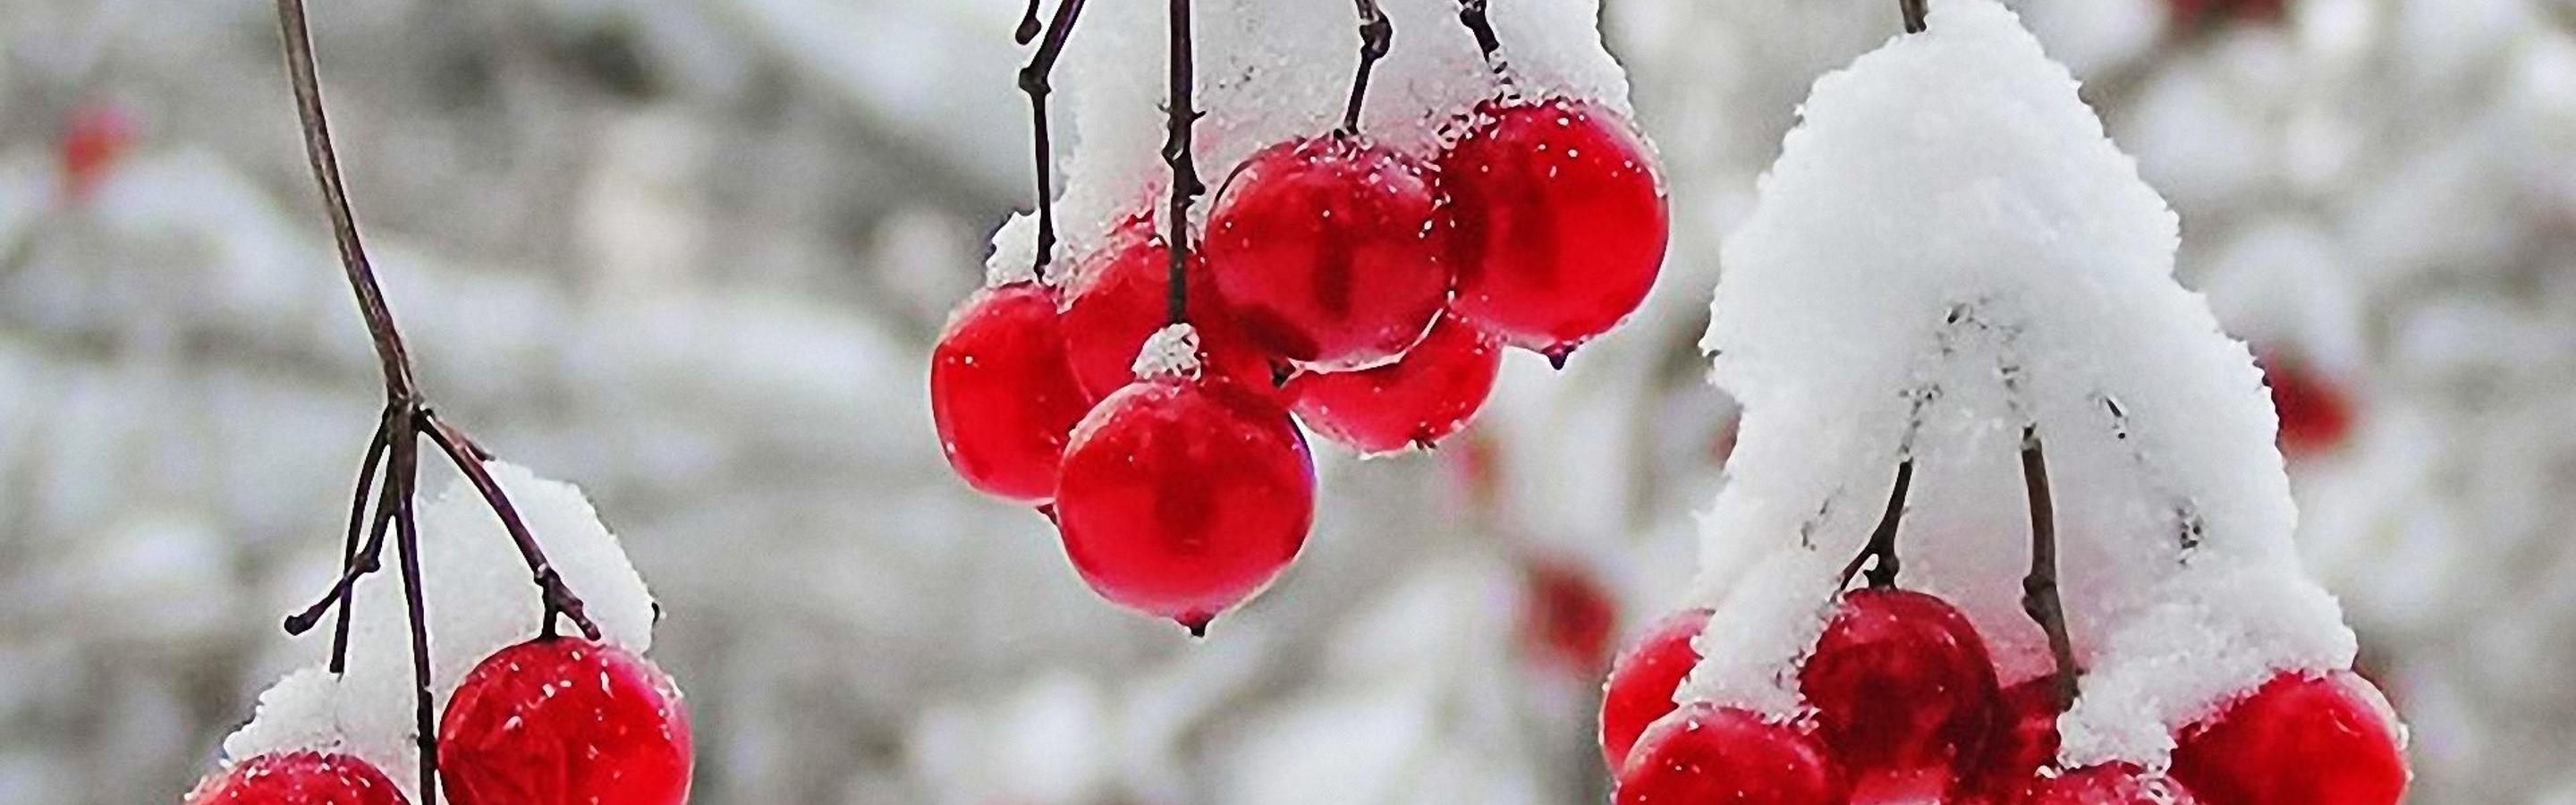 Frozen cranberries winter time